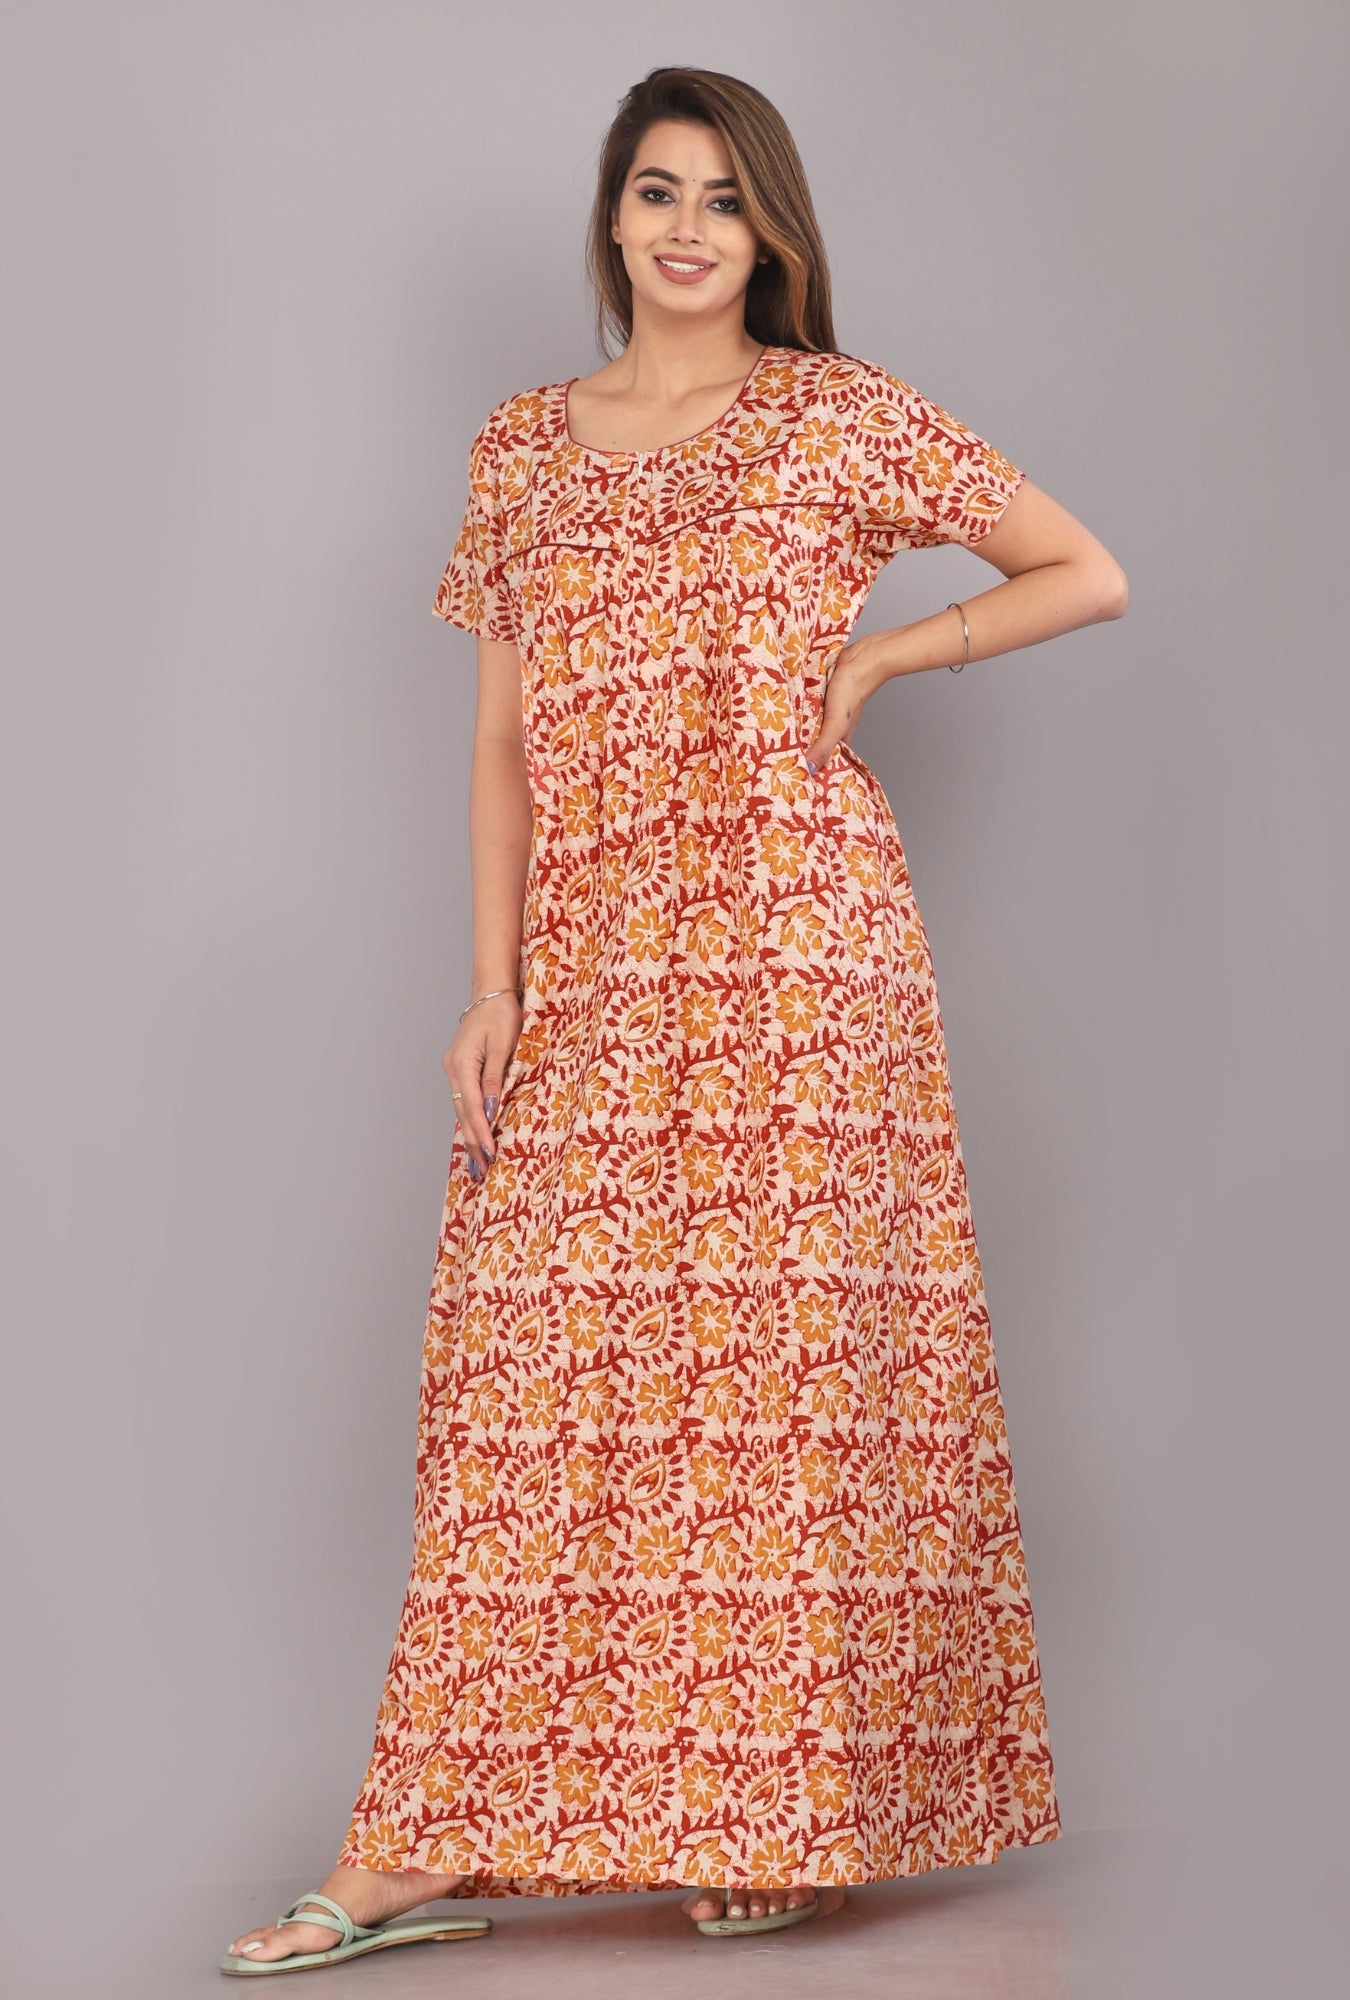 Batik Flower Rust Cotton Printed Nightwear Gowns